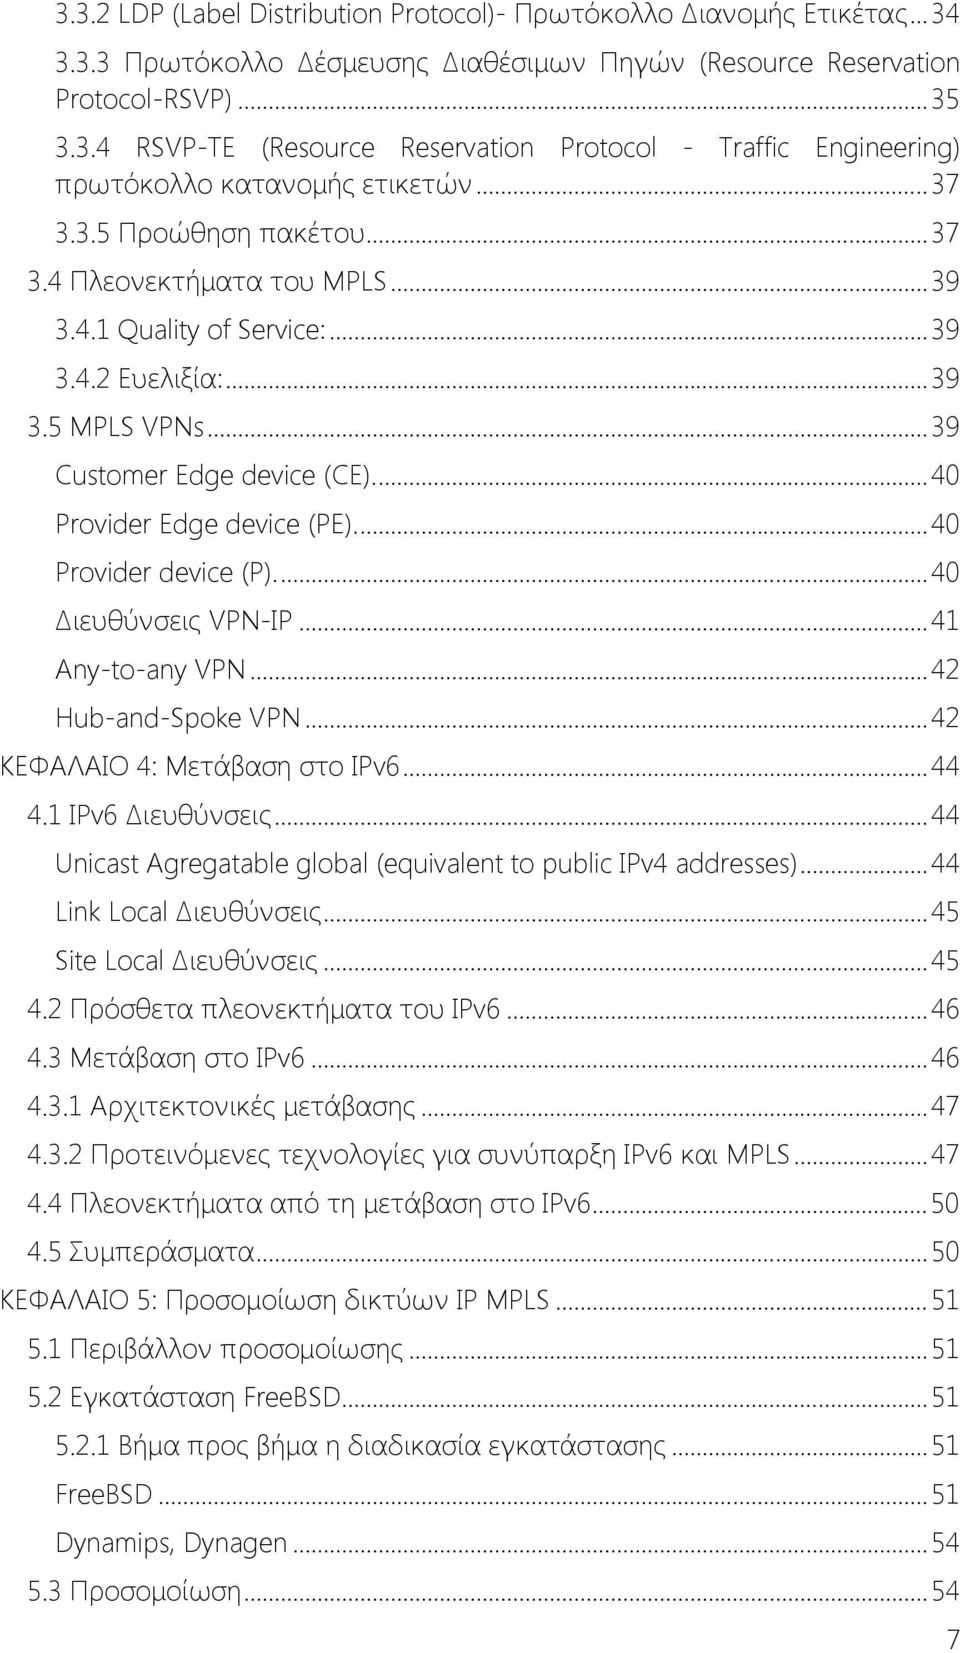 ... 40 Provider device (P).... 40 Διευθύνσεις VPN-IP... 41 Any-to-any VPN... 42 Hub-and-Spoke VPN... 42 ΚΕΦΑΛΑΙΟ 4: Μετάβαση στο IPv6... 44 4.1 IPv6 Διευθύνσεις.